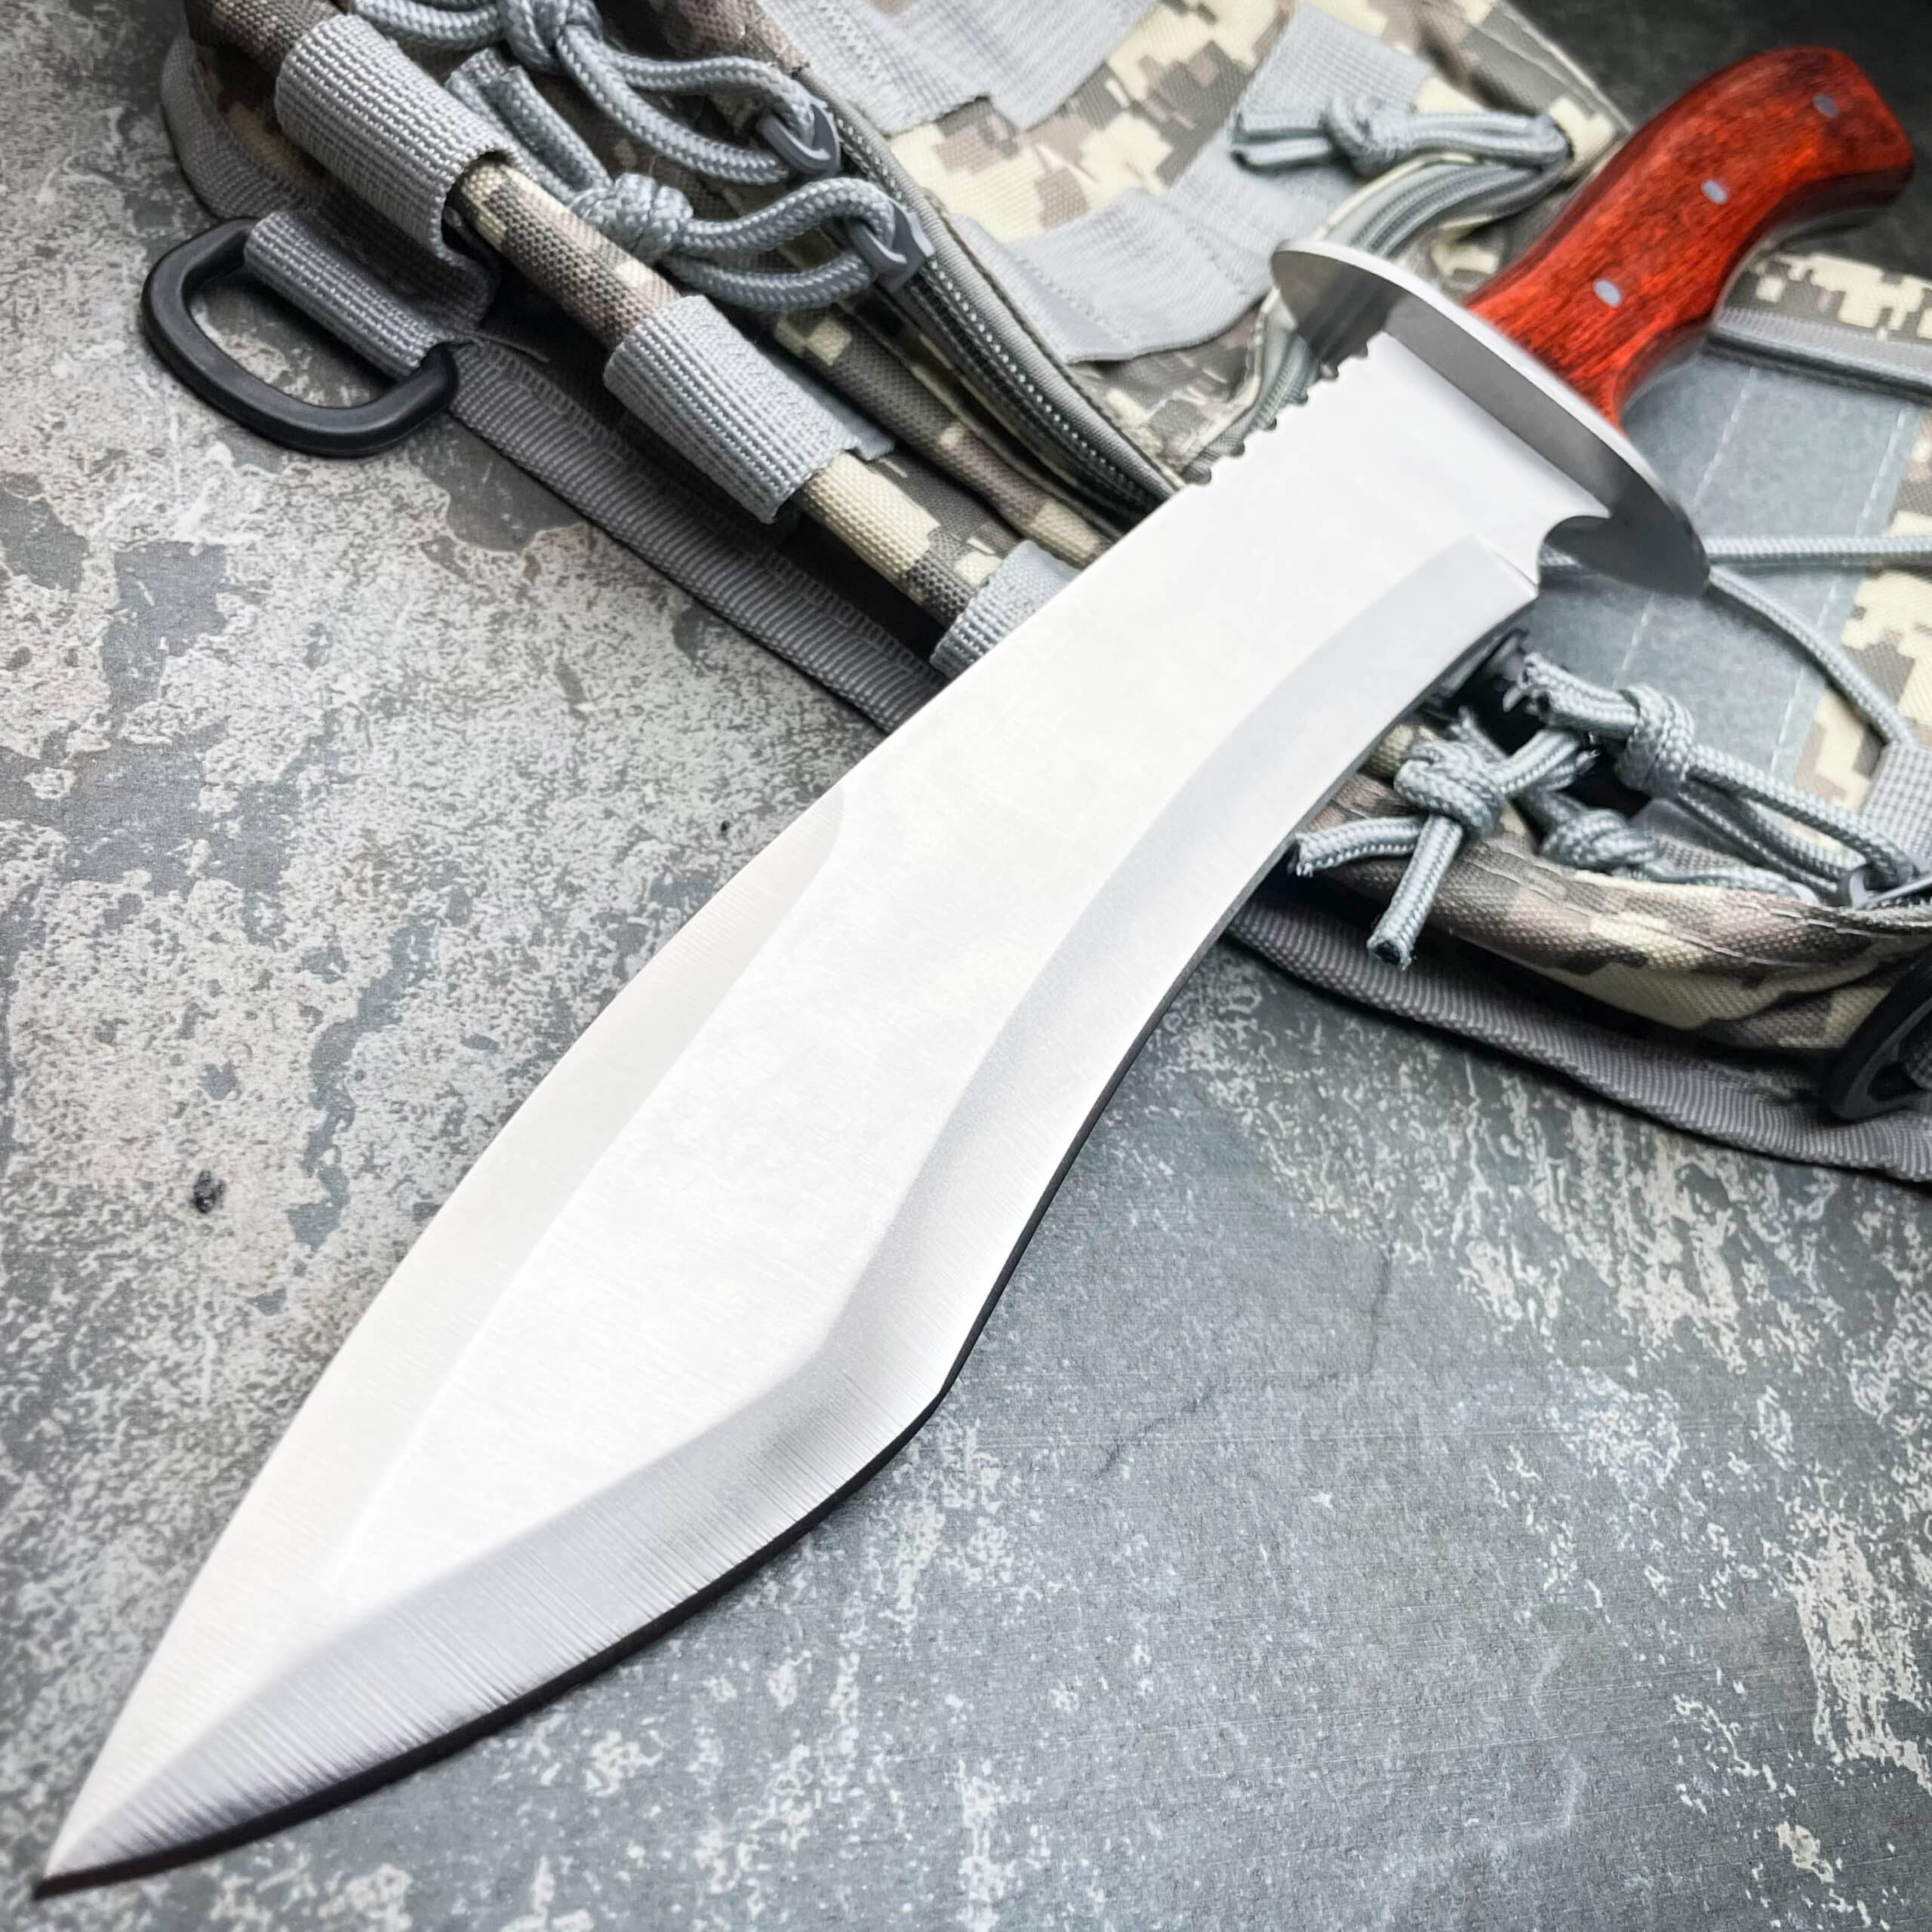  SZCO Supplies 9” Large Blue/Black 3pc Ninja Kunai Sport  Throwing Knife Set With Nylon Sheath (211537-BL) : Sports & Outdoors